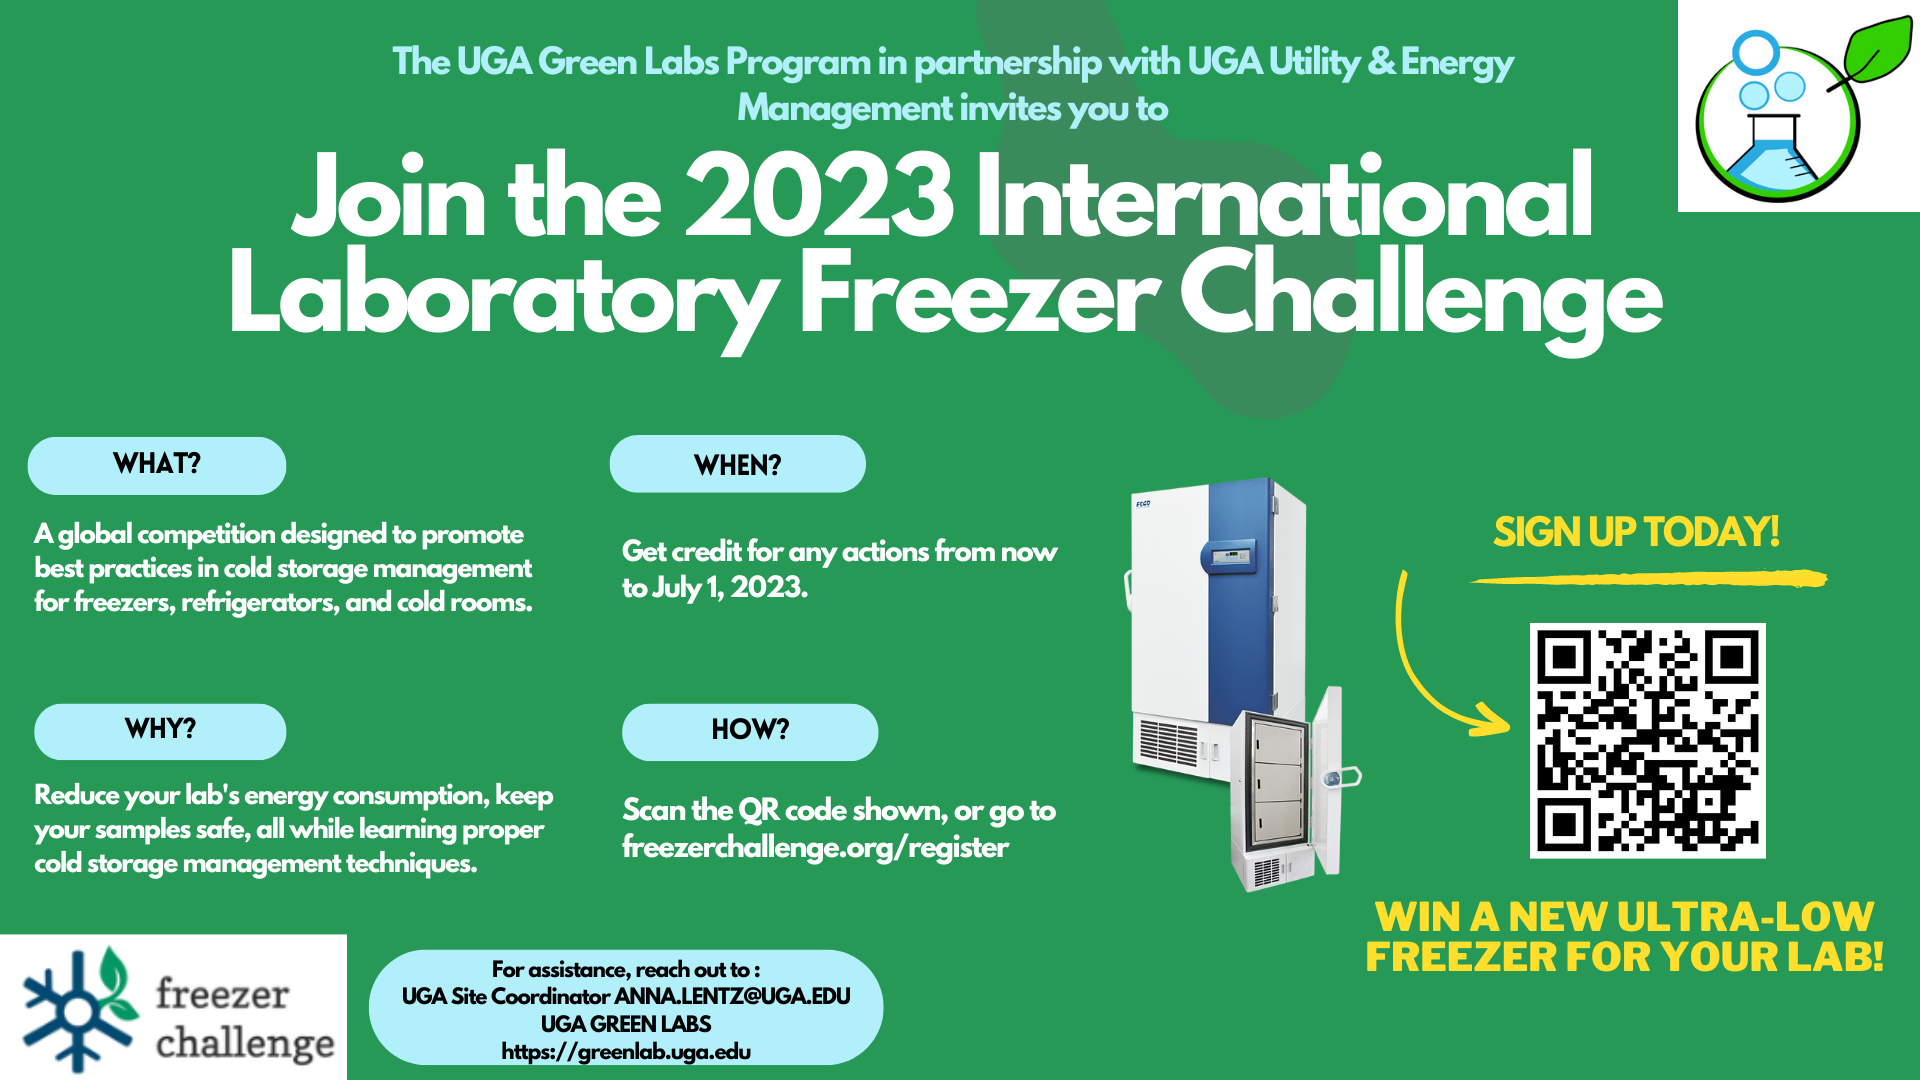 Freezer Challenge